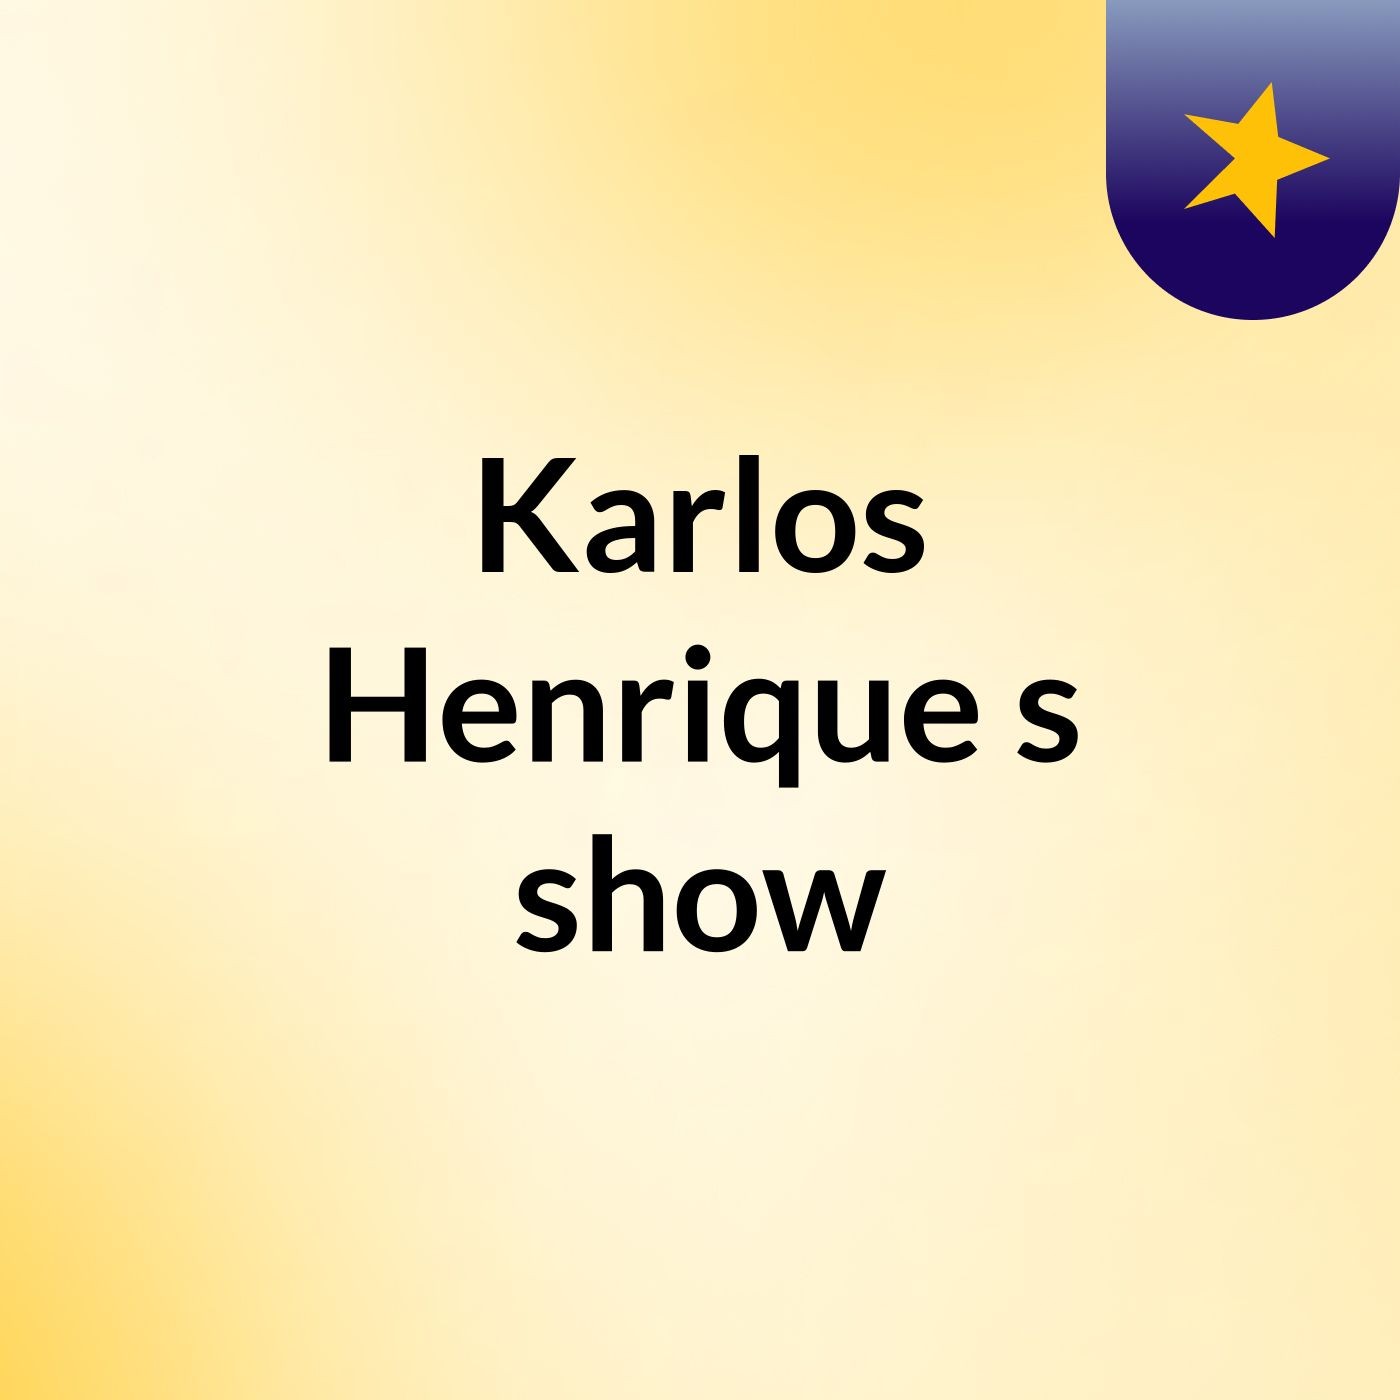 Karlos Henrique's show